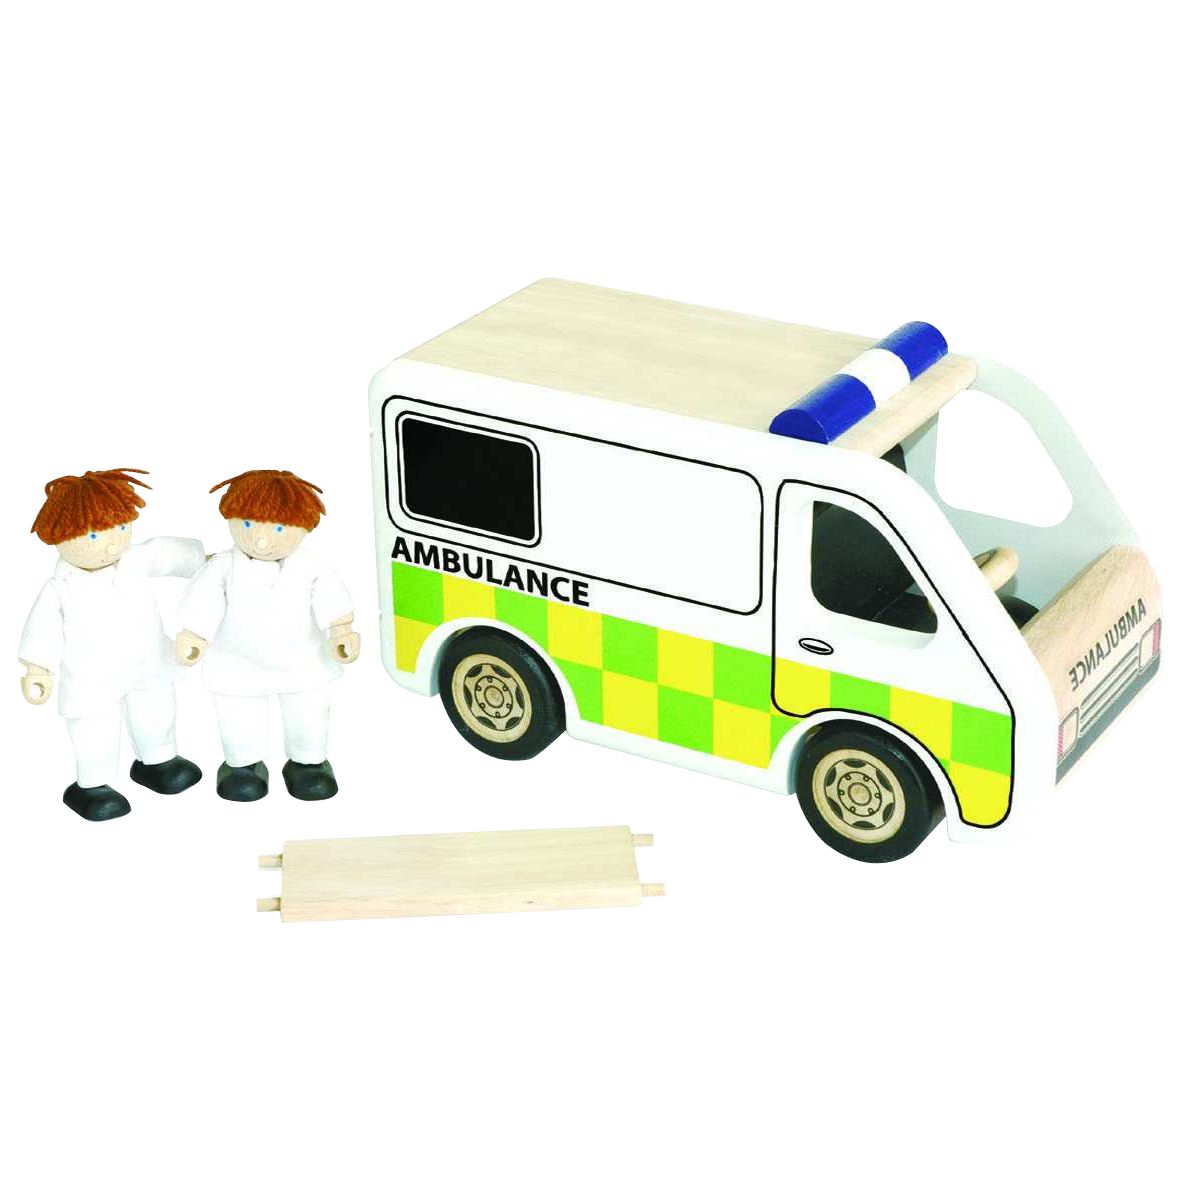 Pintoy Wooden Ambulance